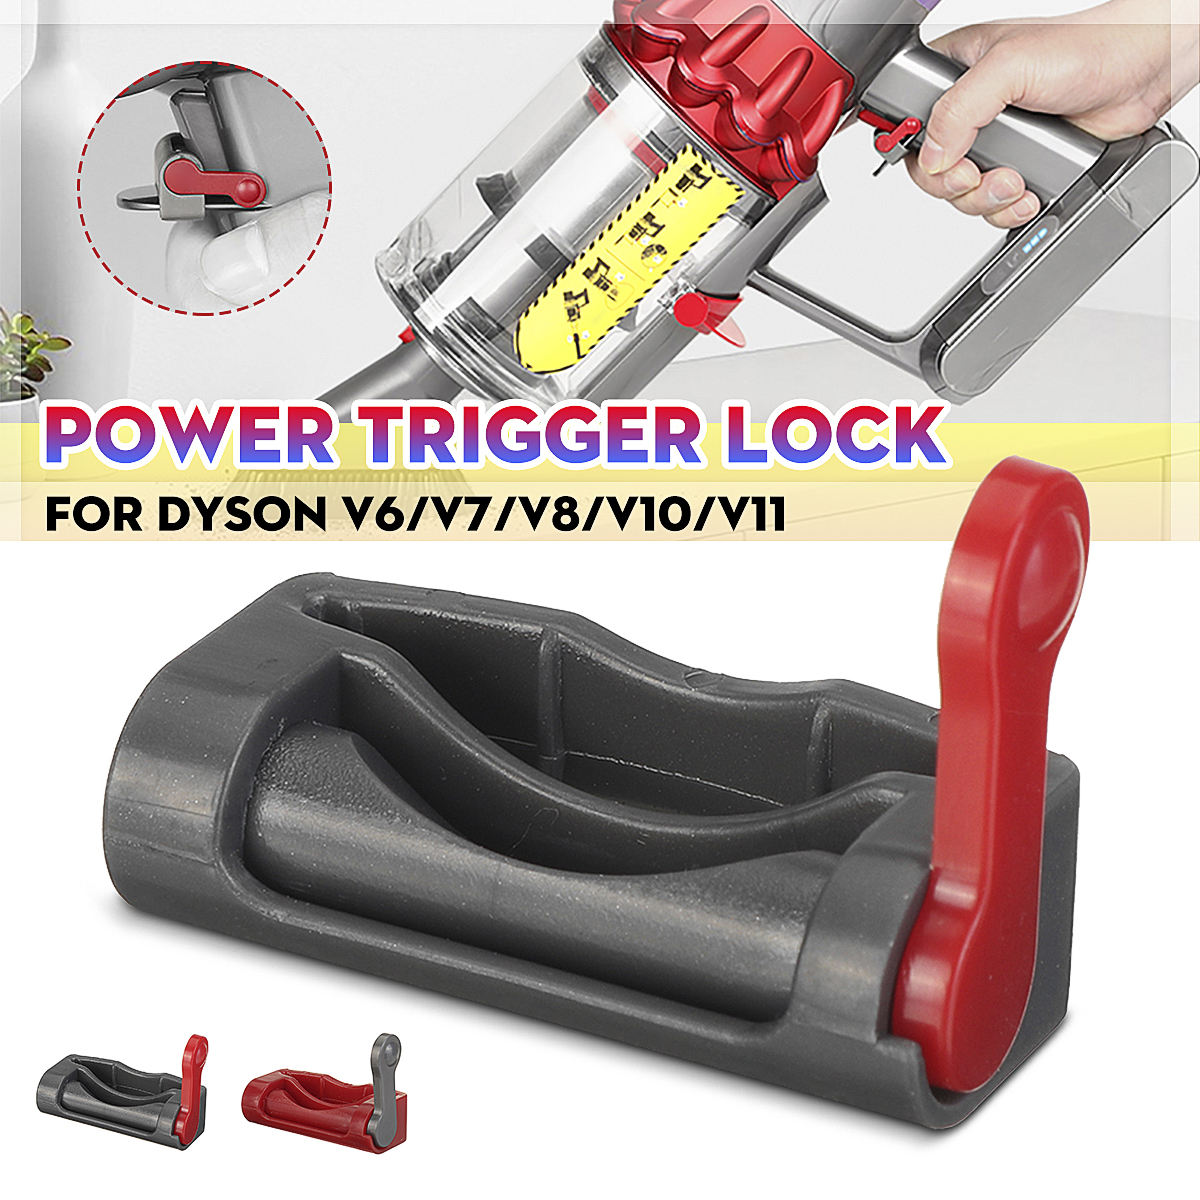 Find Trigger Lock Replacement for Dyson V6 V7 V8 V10 V11 Vacuum Cleaner Not original for Sale on Gipsybee.com with cryptocurrencies